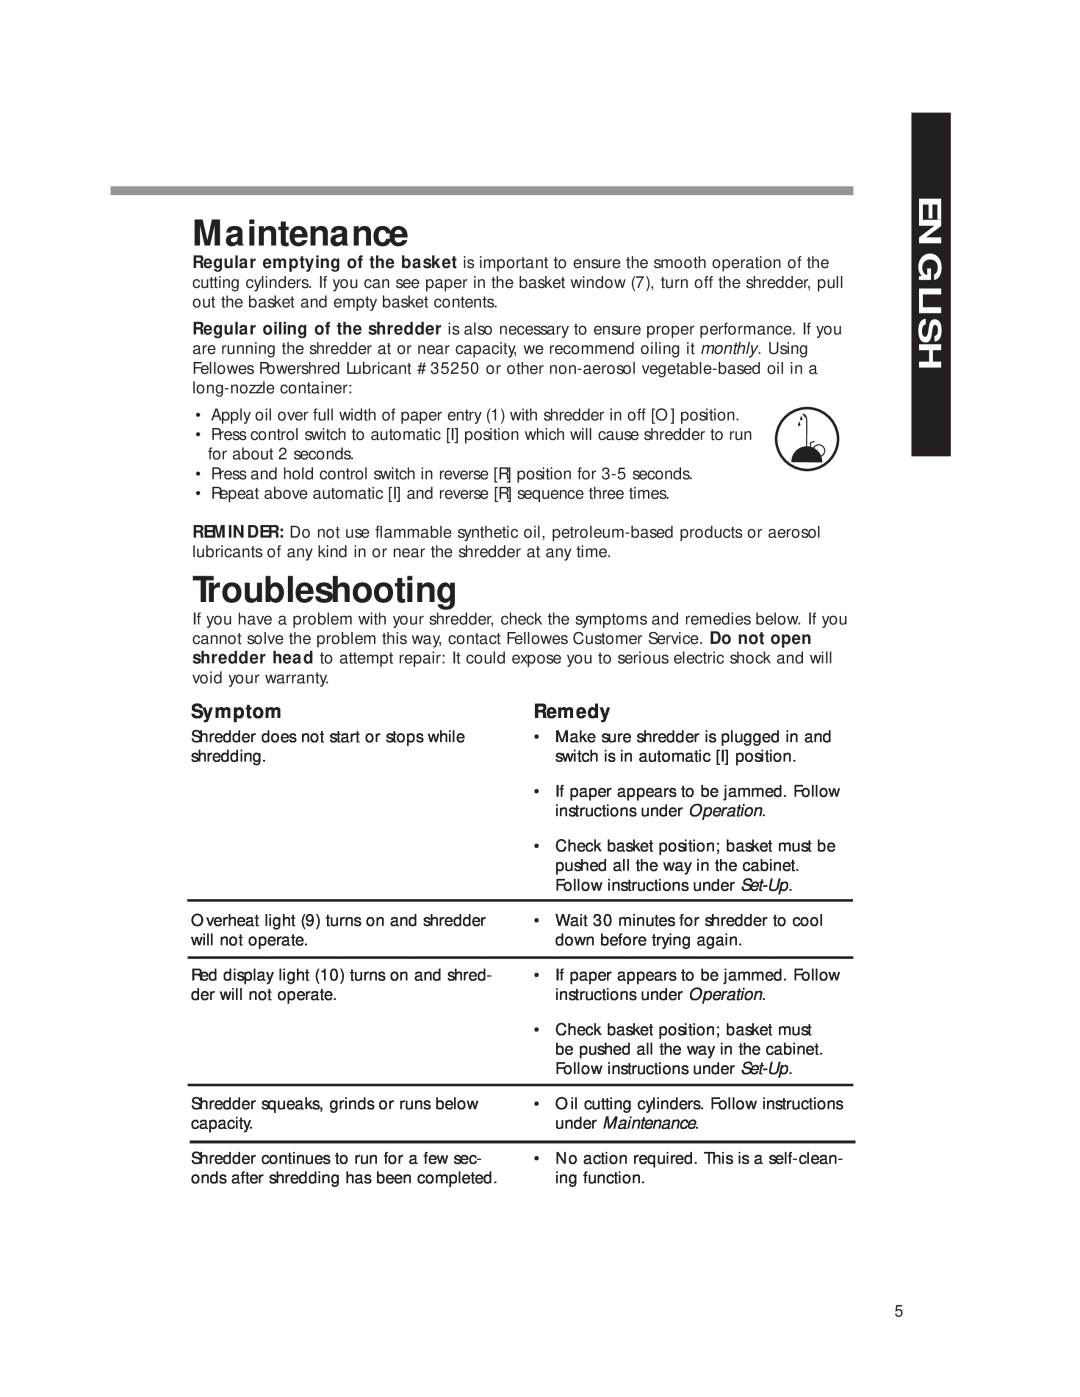 Fellowes DM8C manual Troubleshooting, Symptom, Remedy, under Maintenance, English 